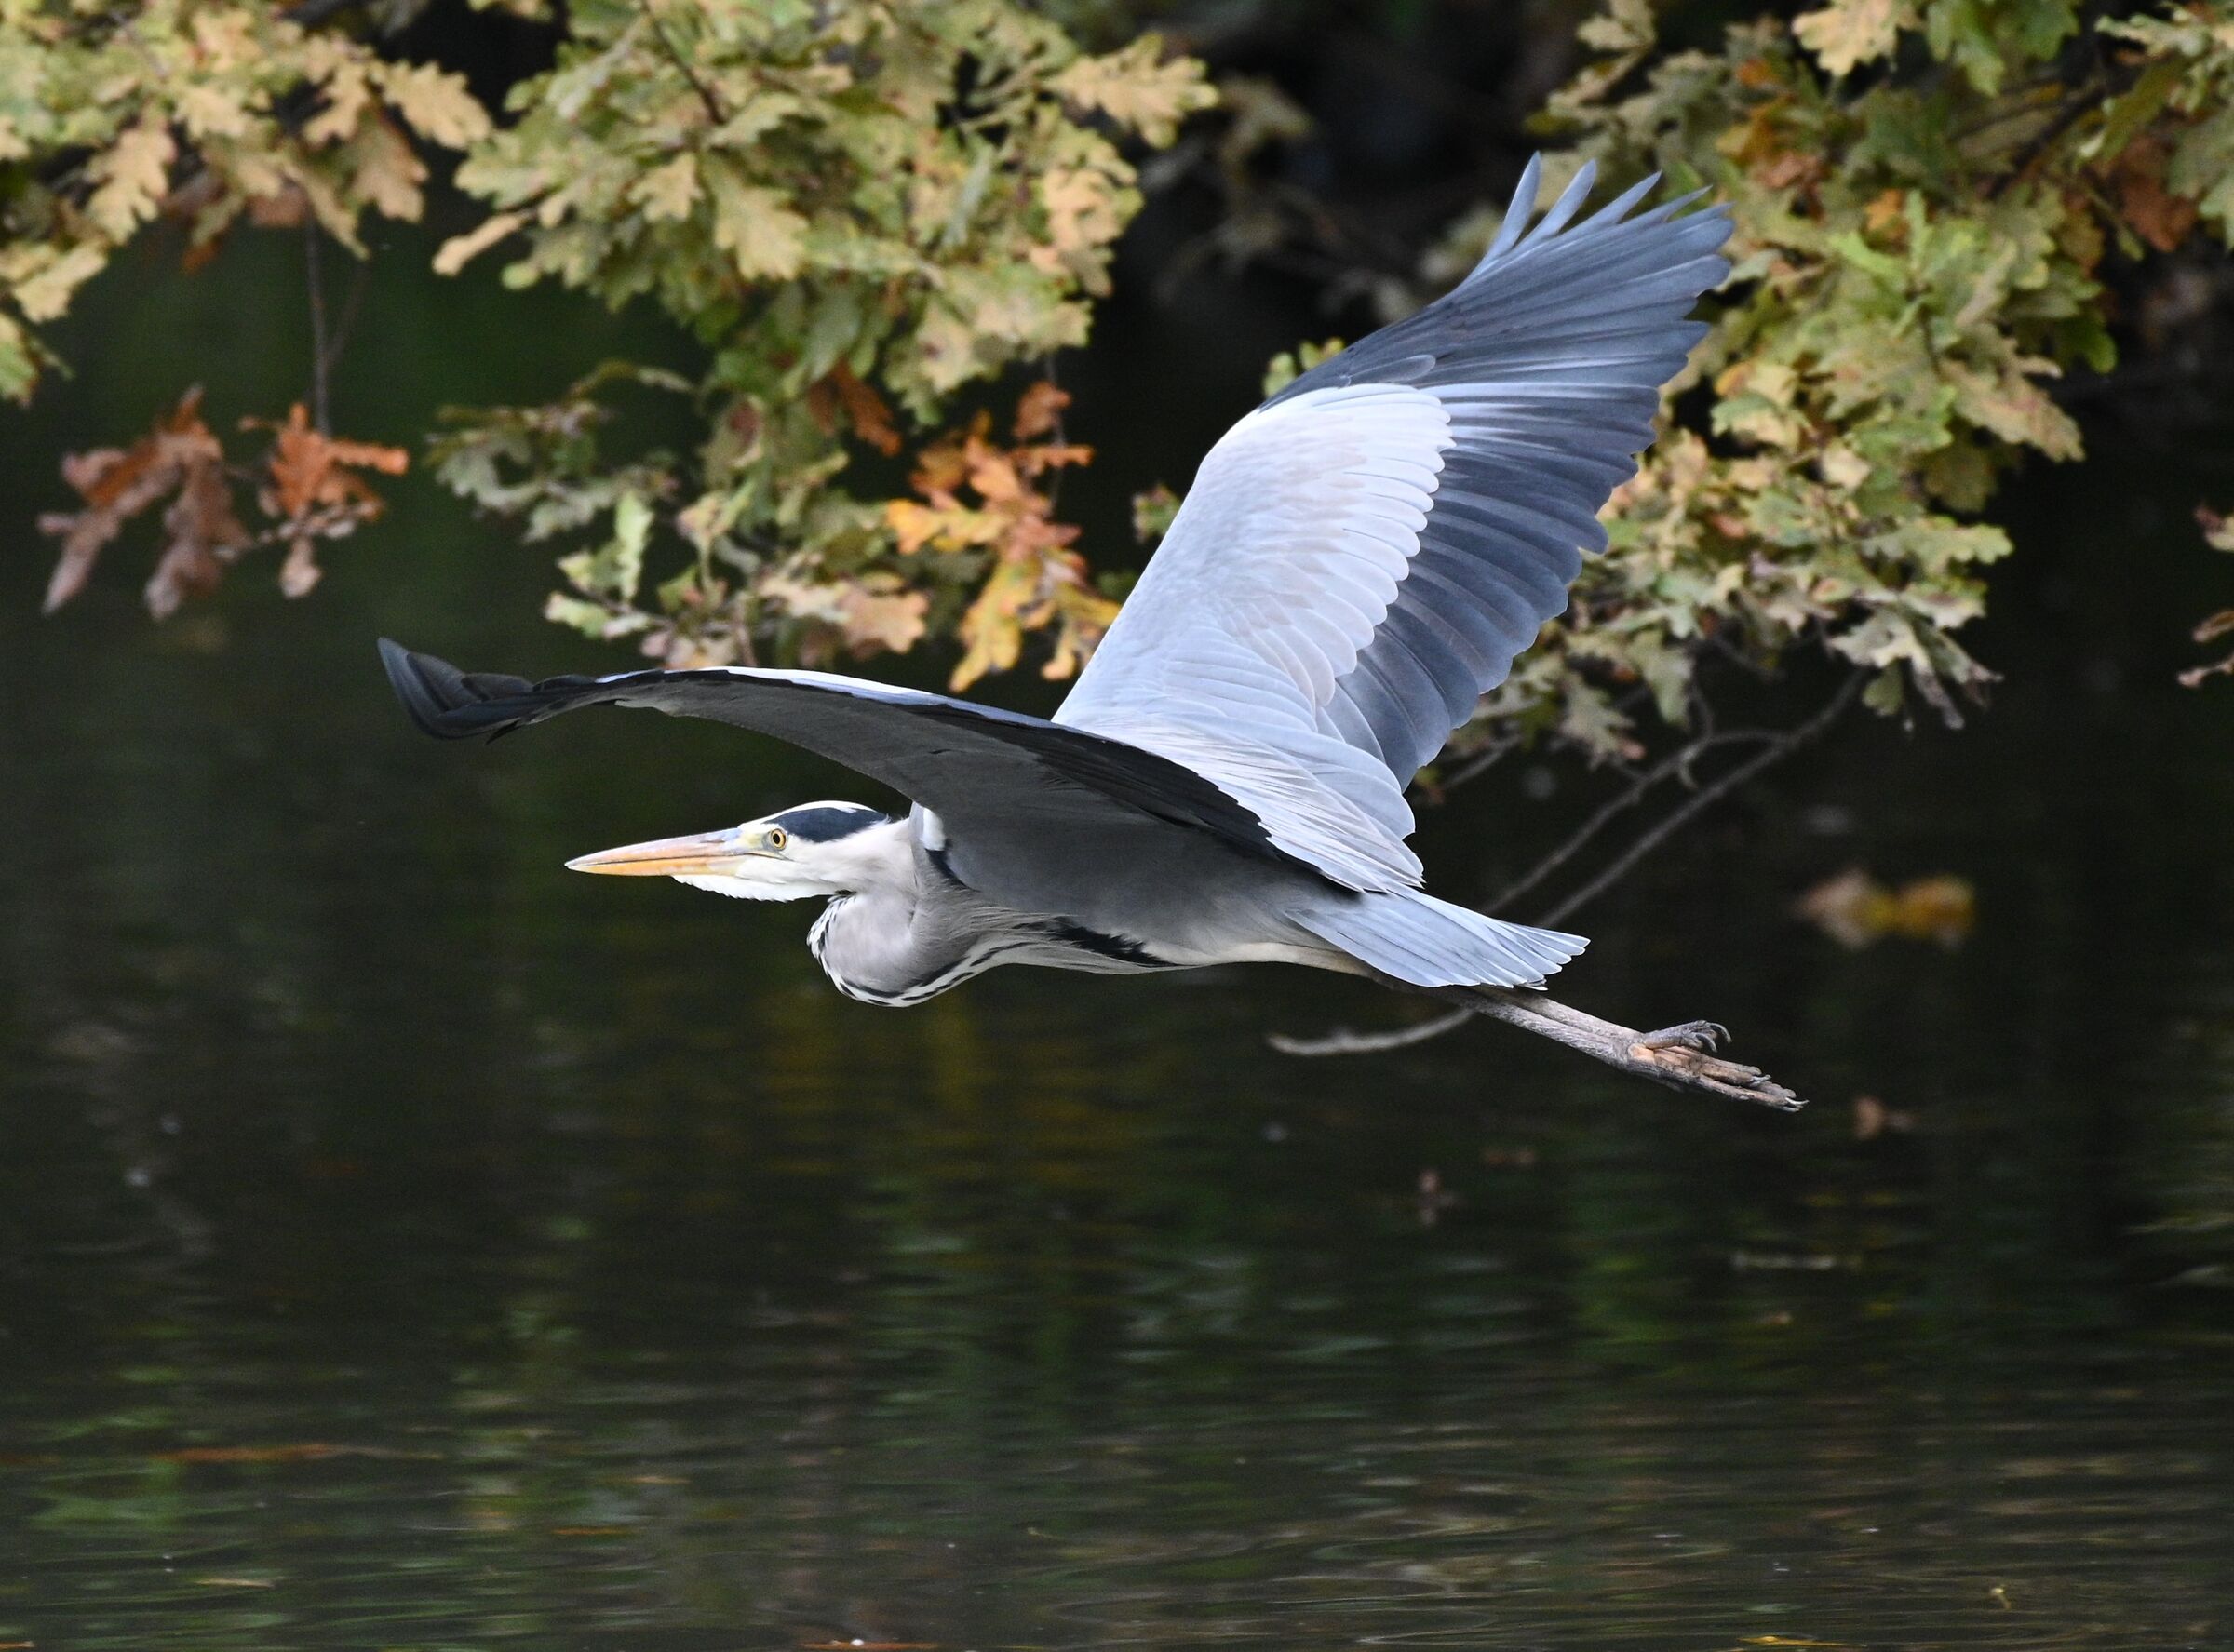 The flight of the heron ...